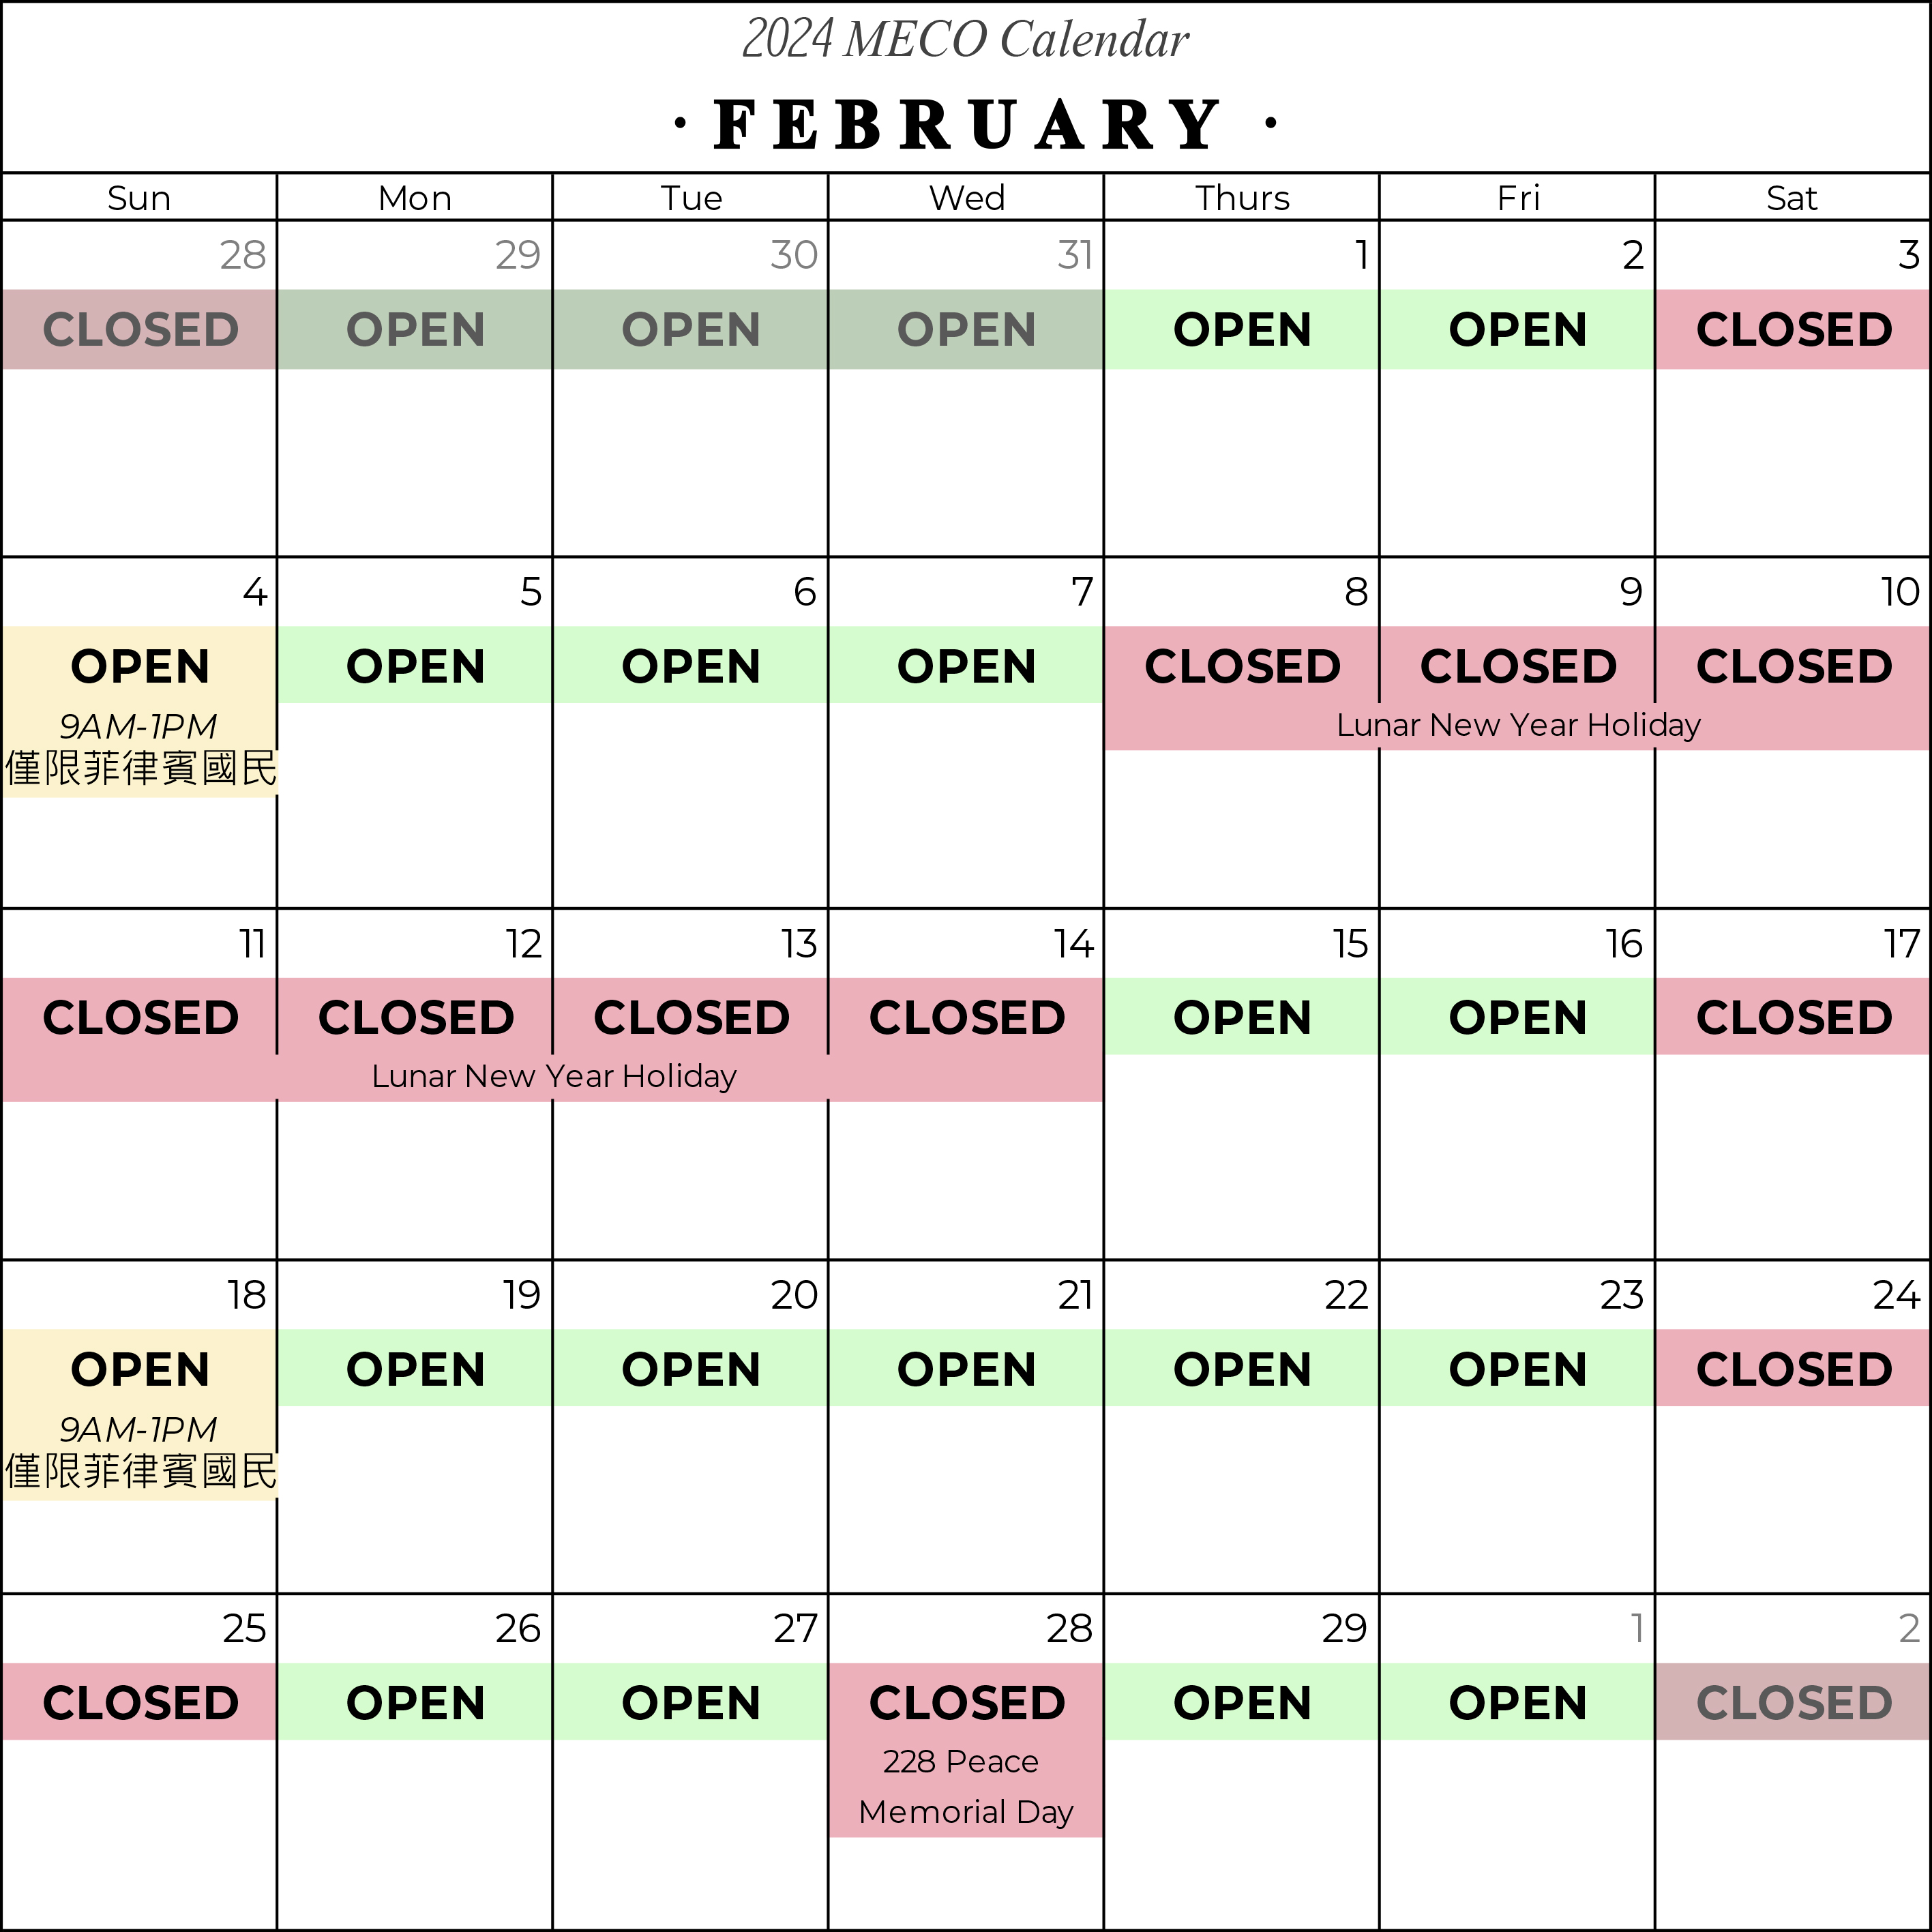 February 2024 Calendar.jpg